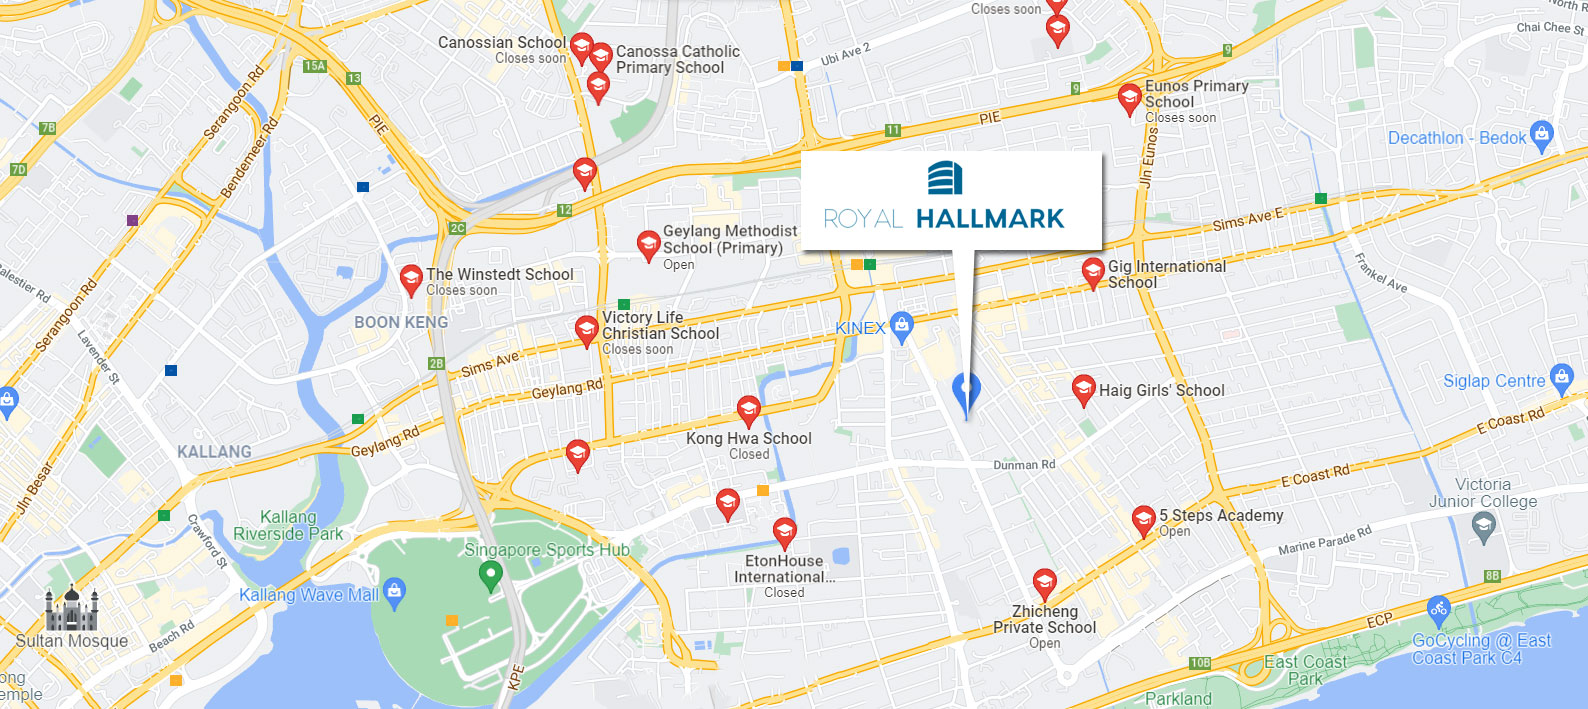 Royal Hallmark is located near many prestigious and good quality schools